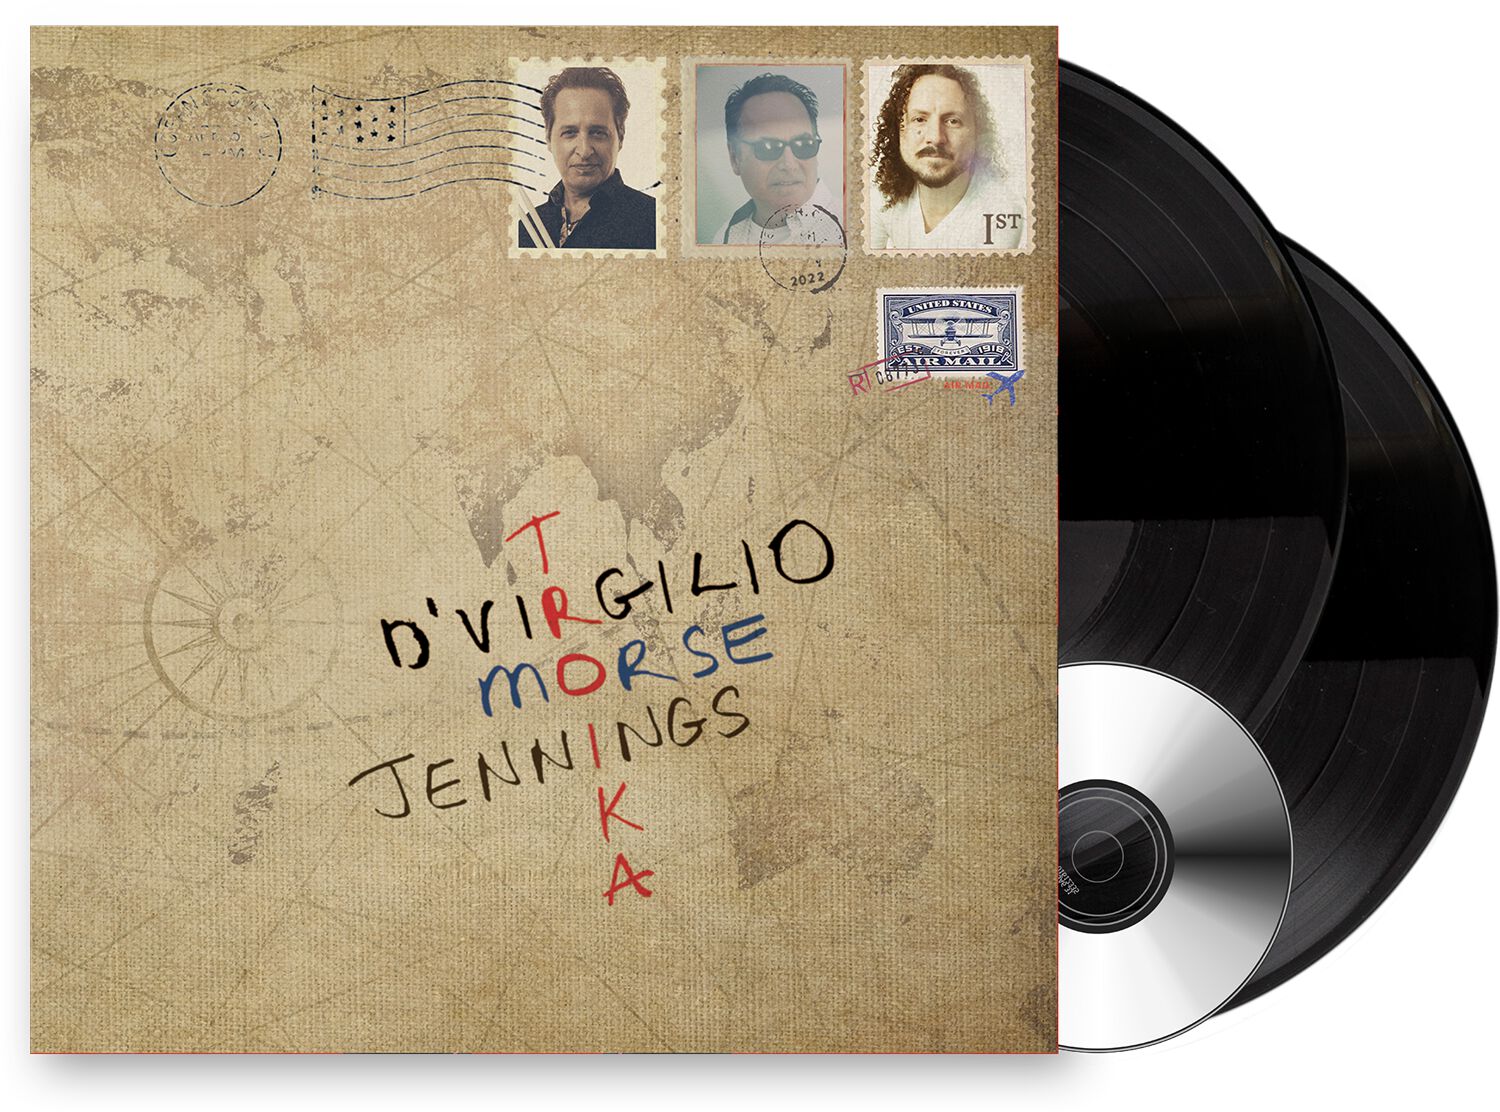 D'VIRGILIO MORSE & JENNINGS - TROIKA - 2LP+CD